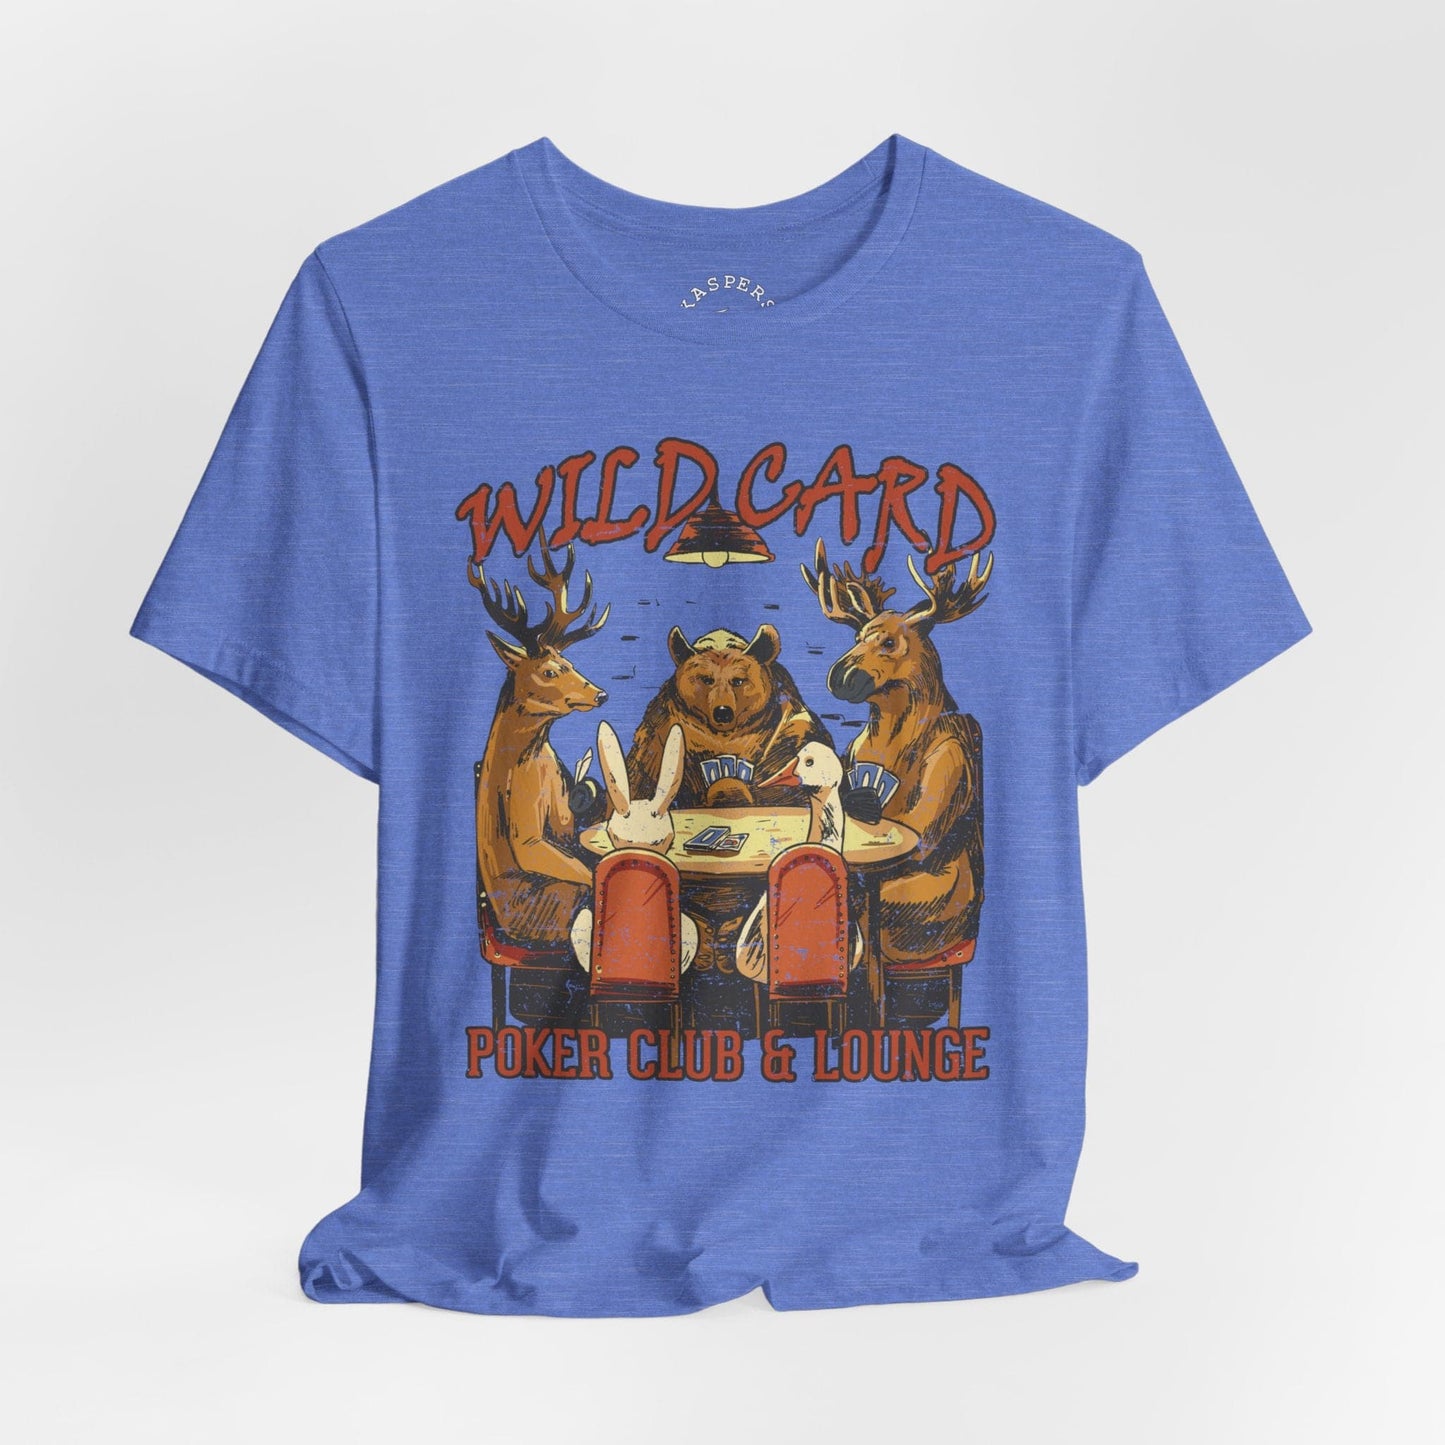 Wild Card Poker Club & Lounge T-Shirt